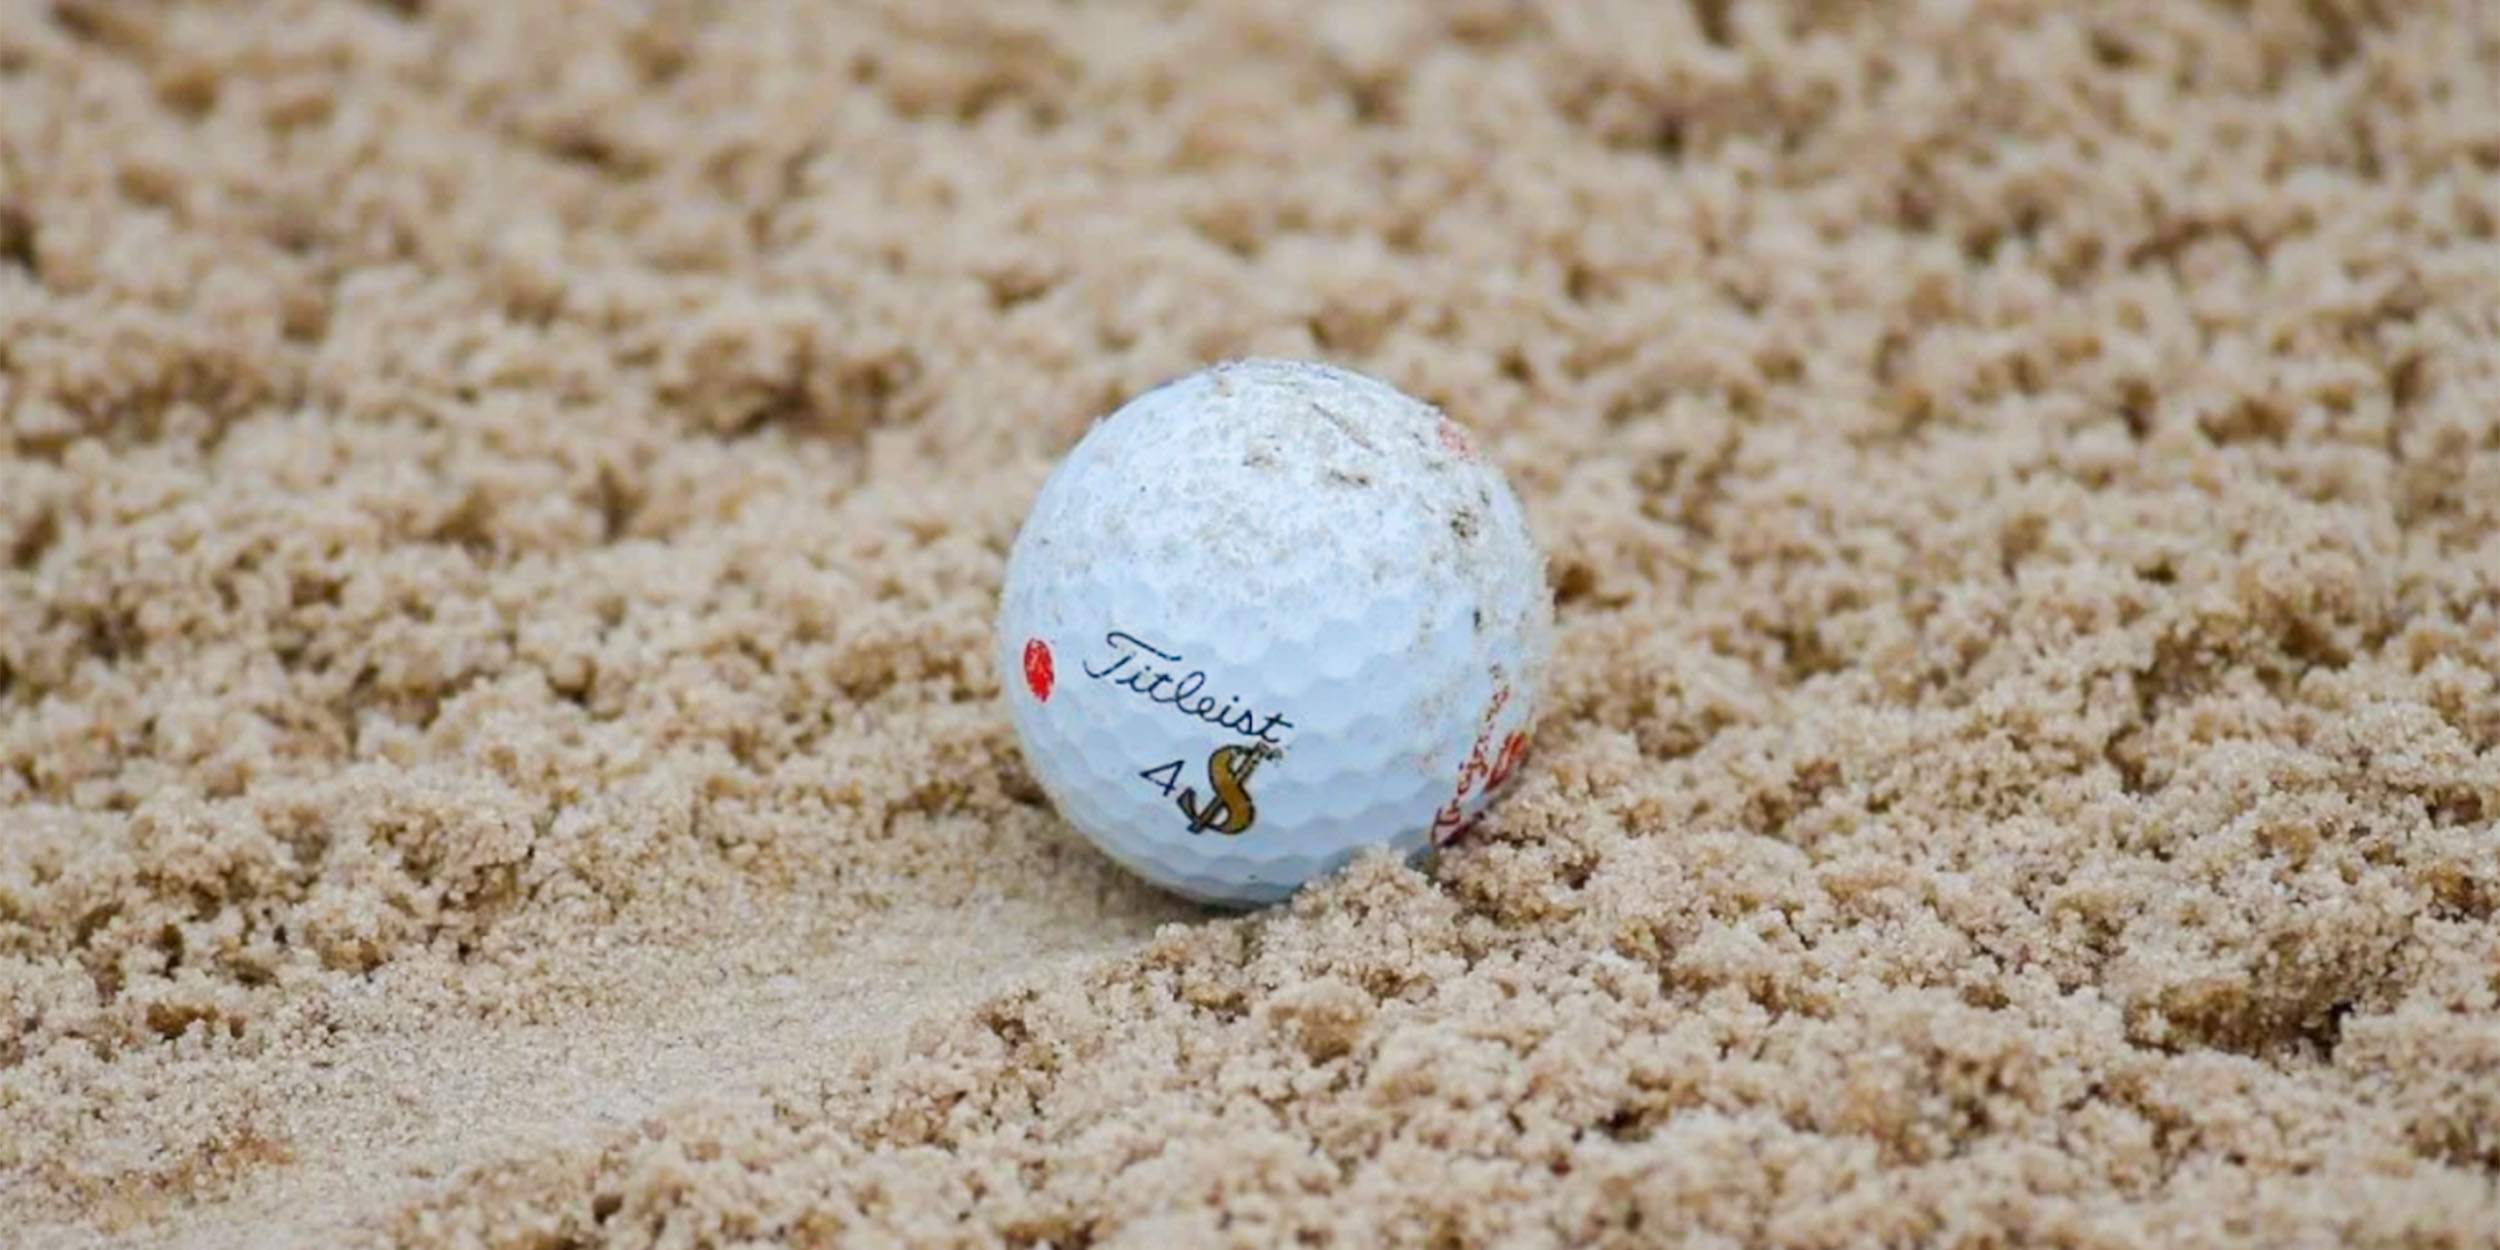 Golf ball getting scuffed by sand